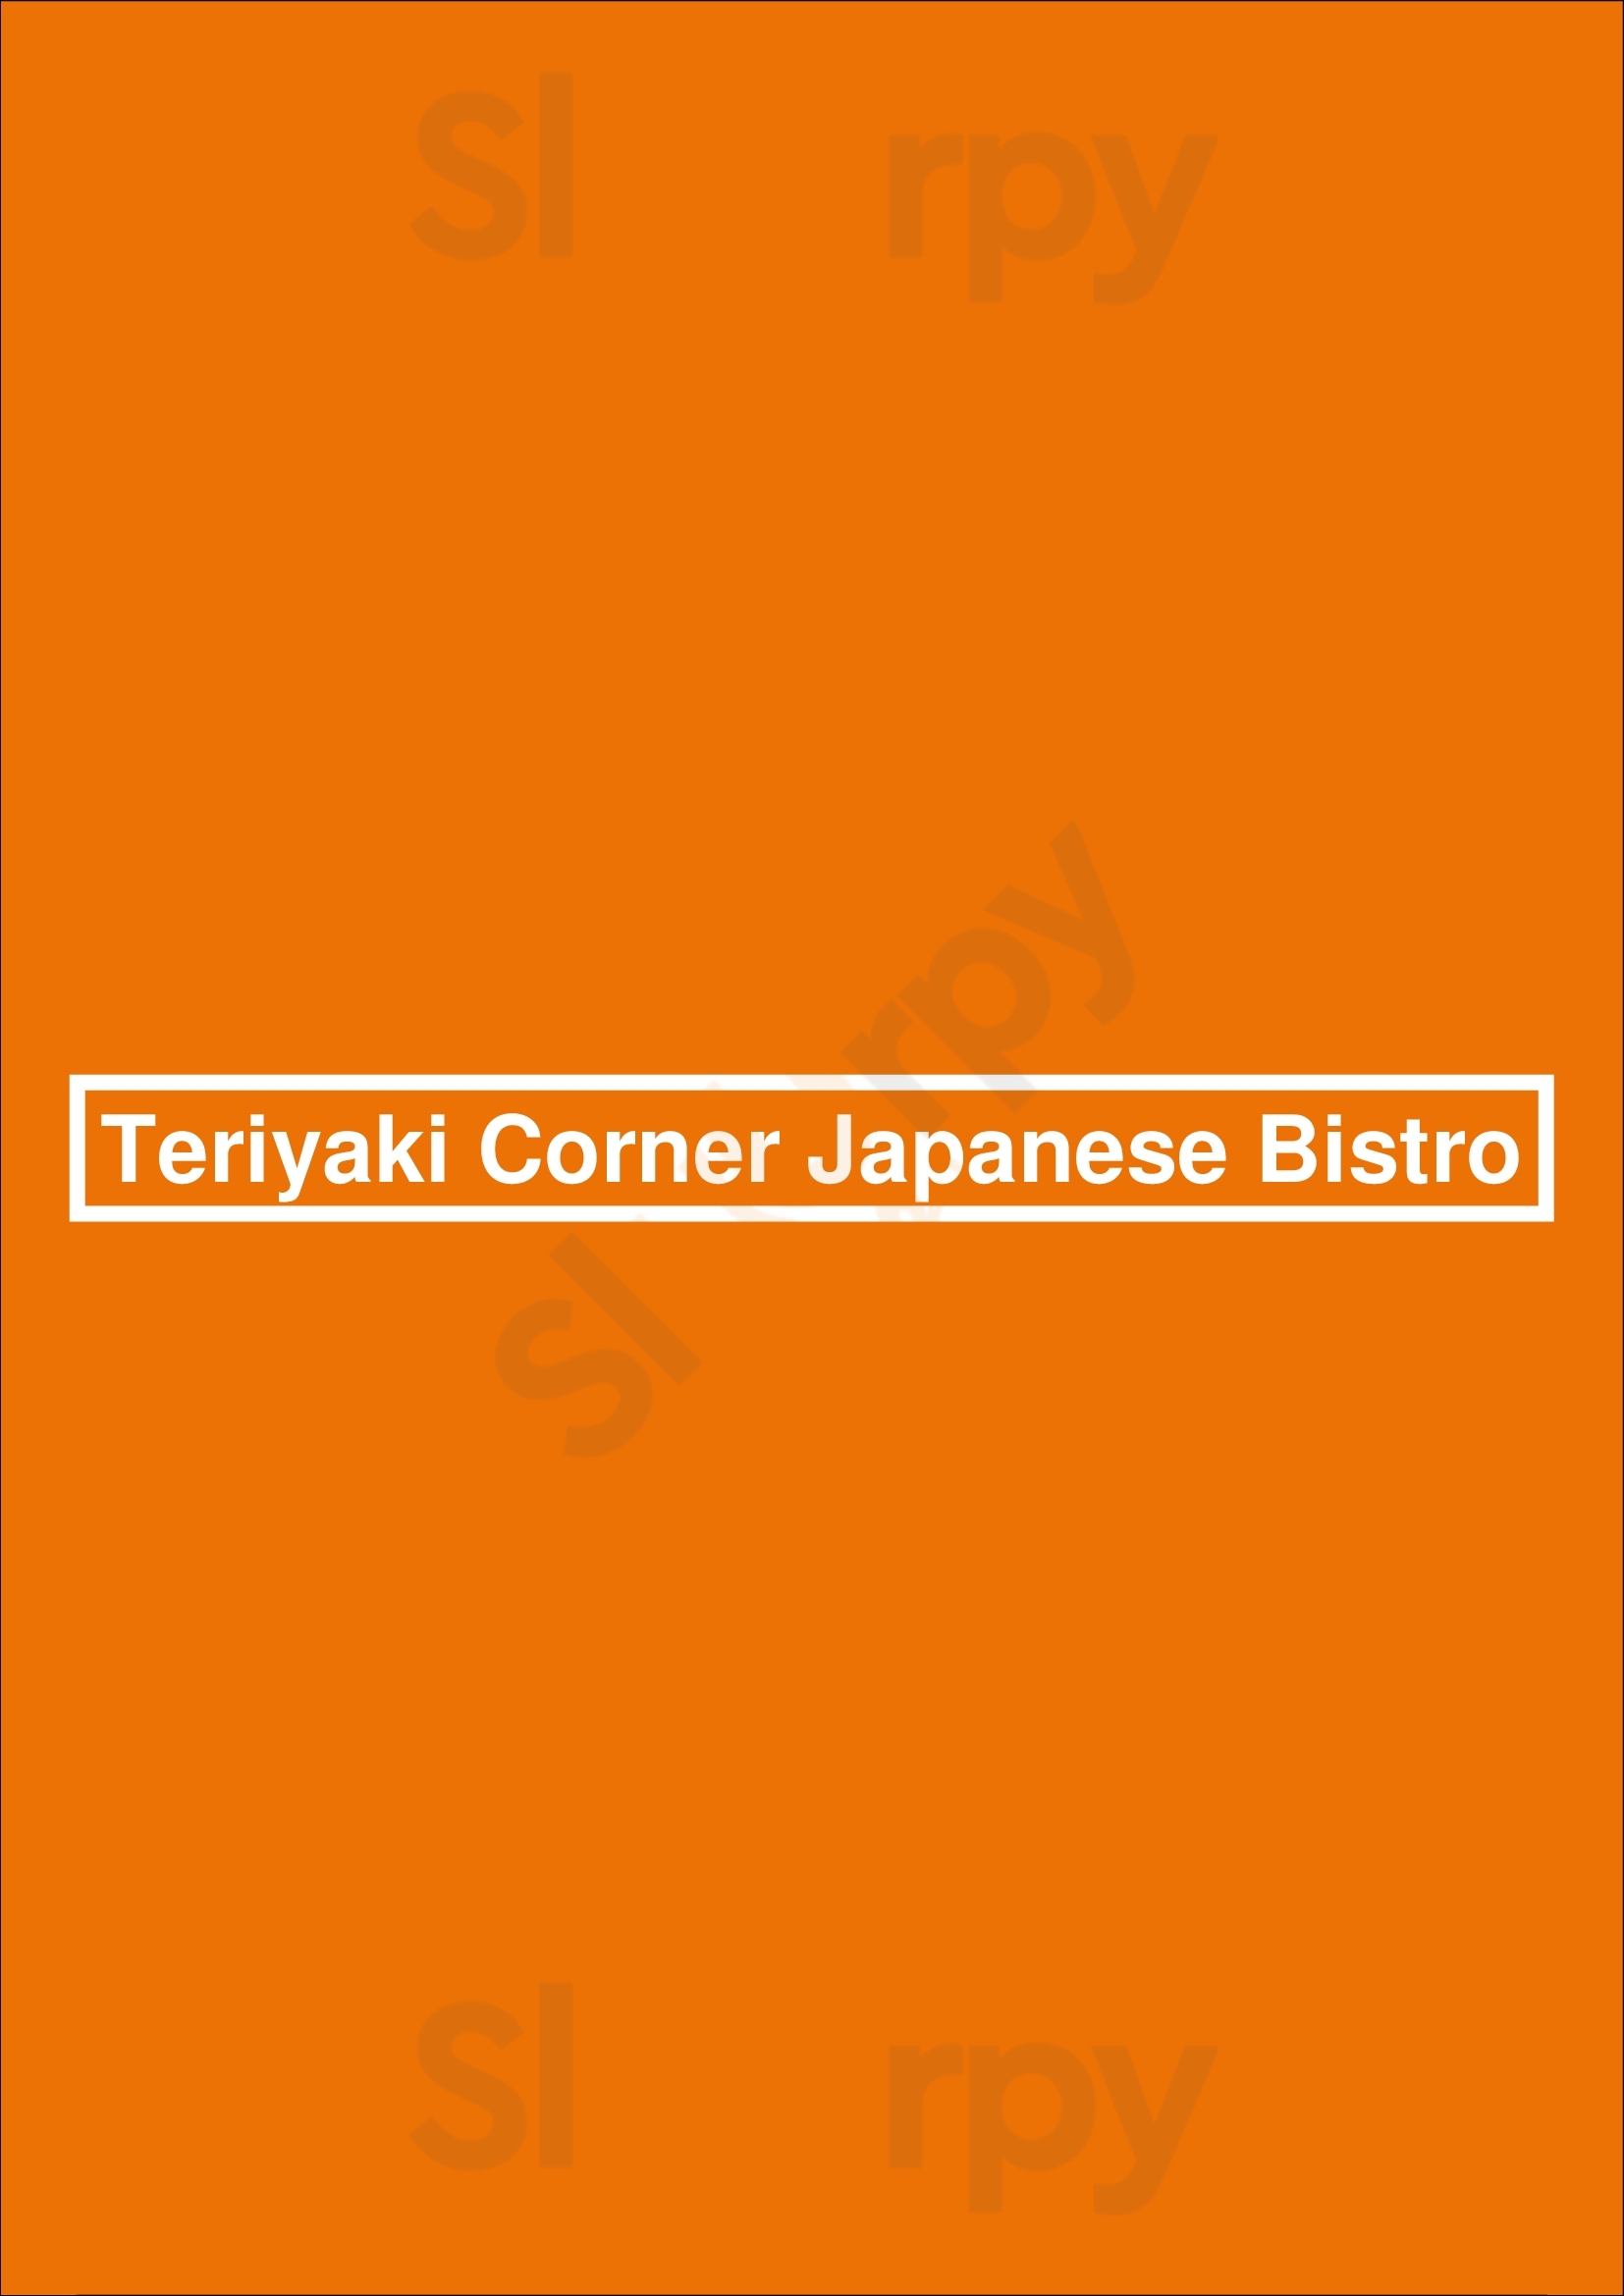 Teriyaki Corner Japanese Bistro Edmonton Menu - 1